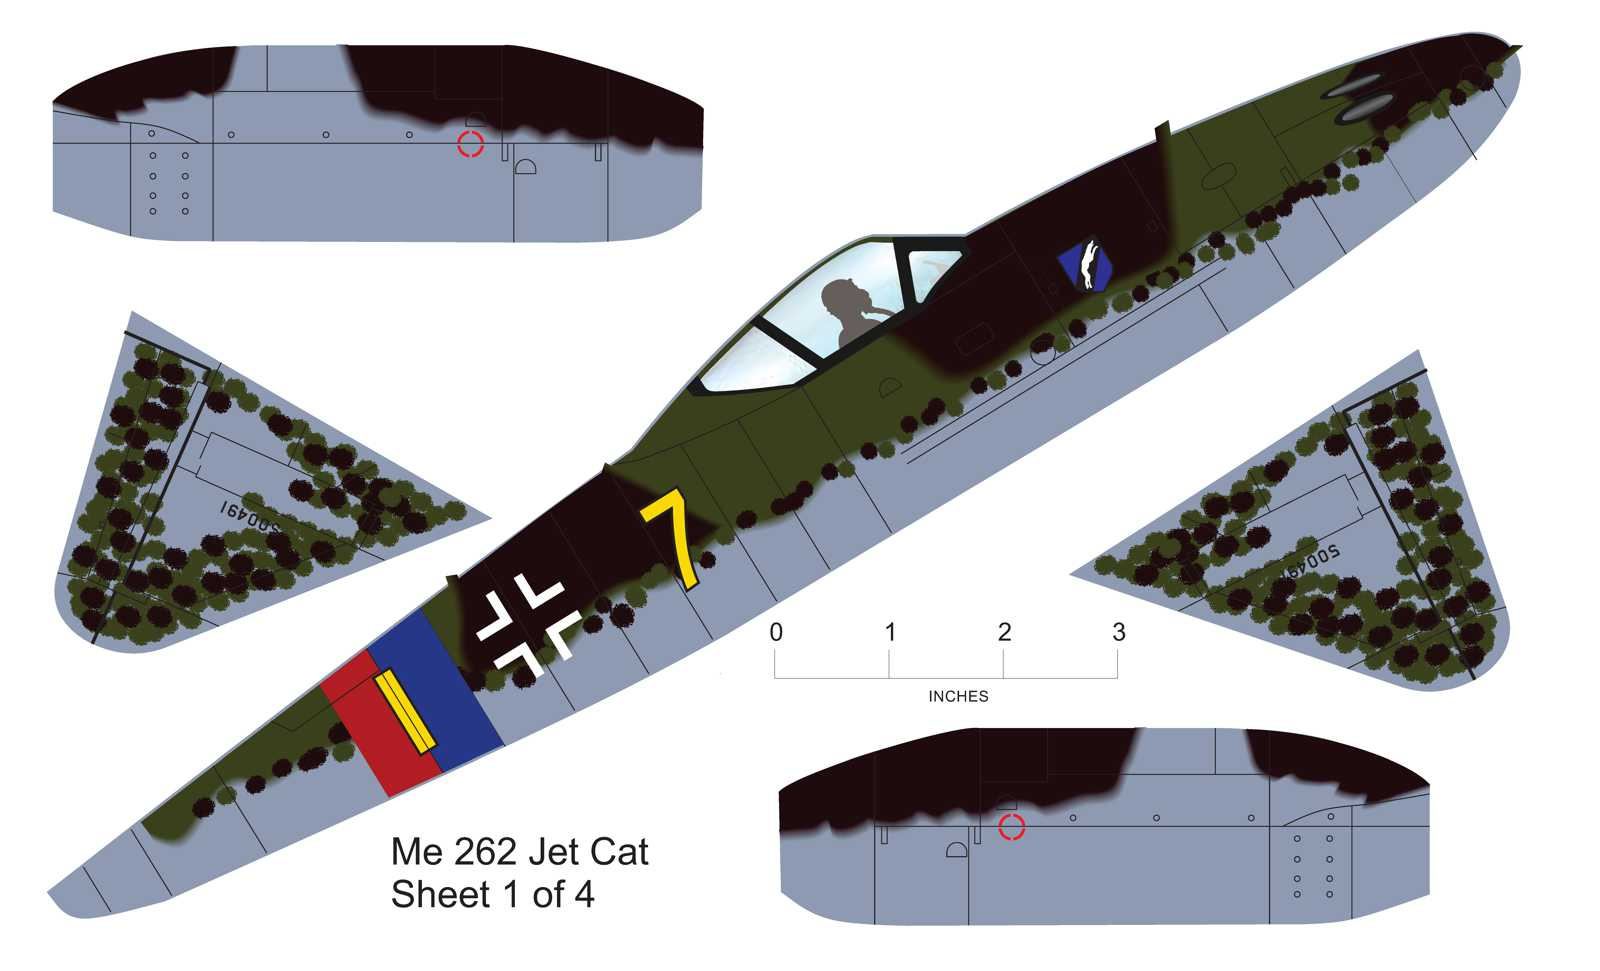 https://0201.nccdn.net/1_2/000/000/09b/8c0/Me-262-Jet-Cat-covering-layout-page-1600x971.jpg